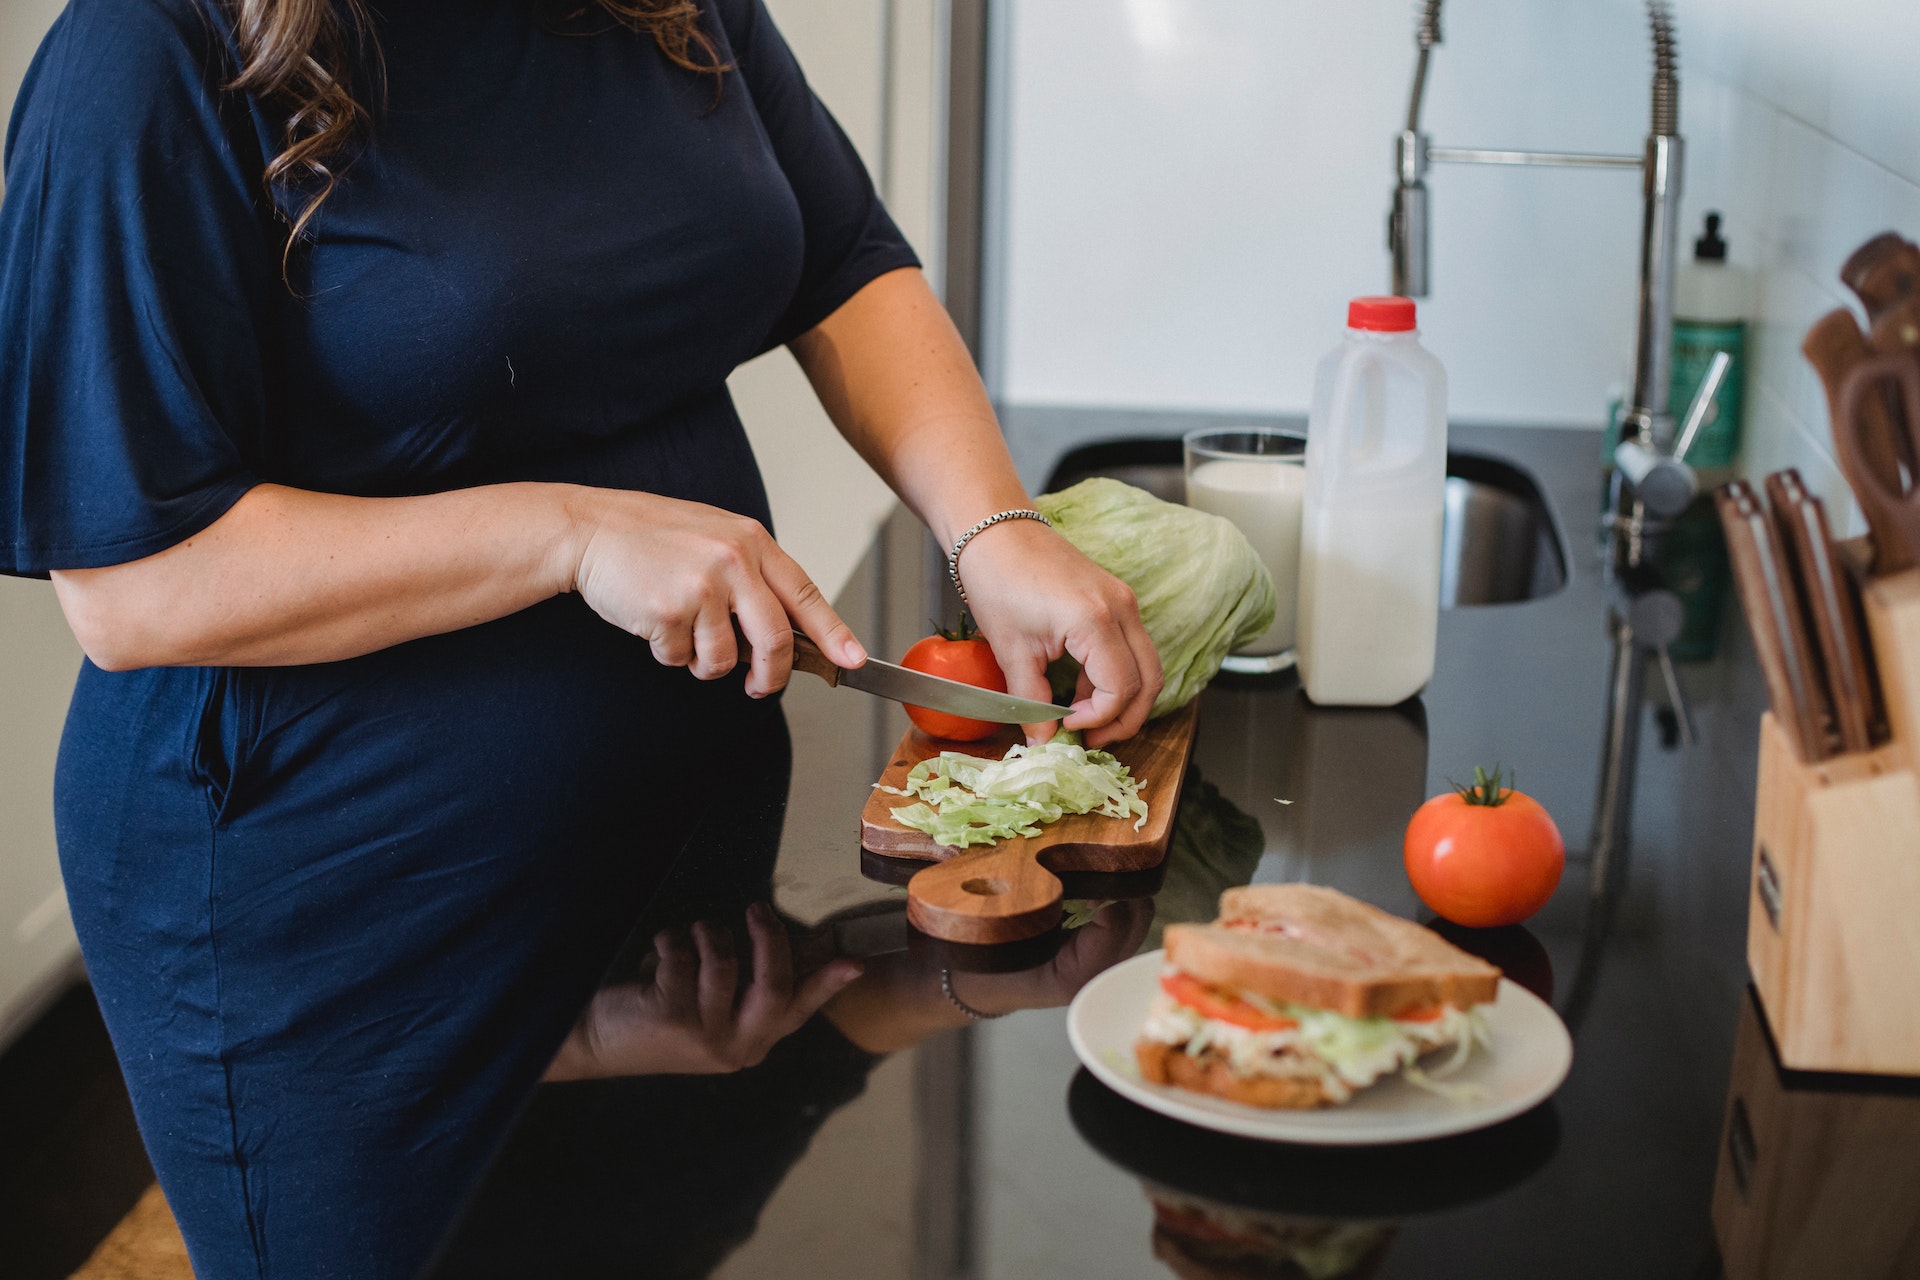 A pregnant woman cutting vegetables | Source: Pexels